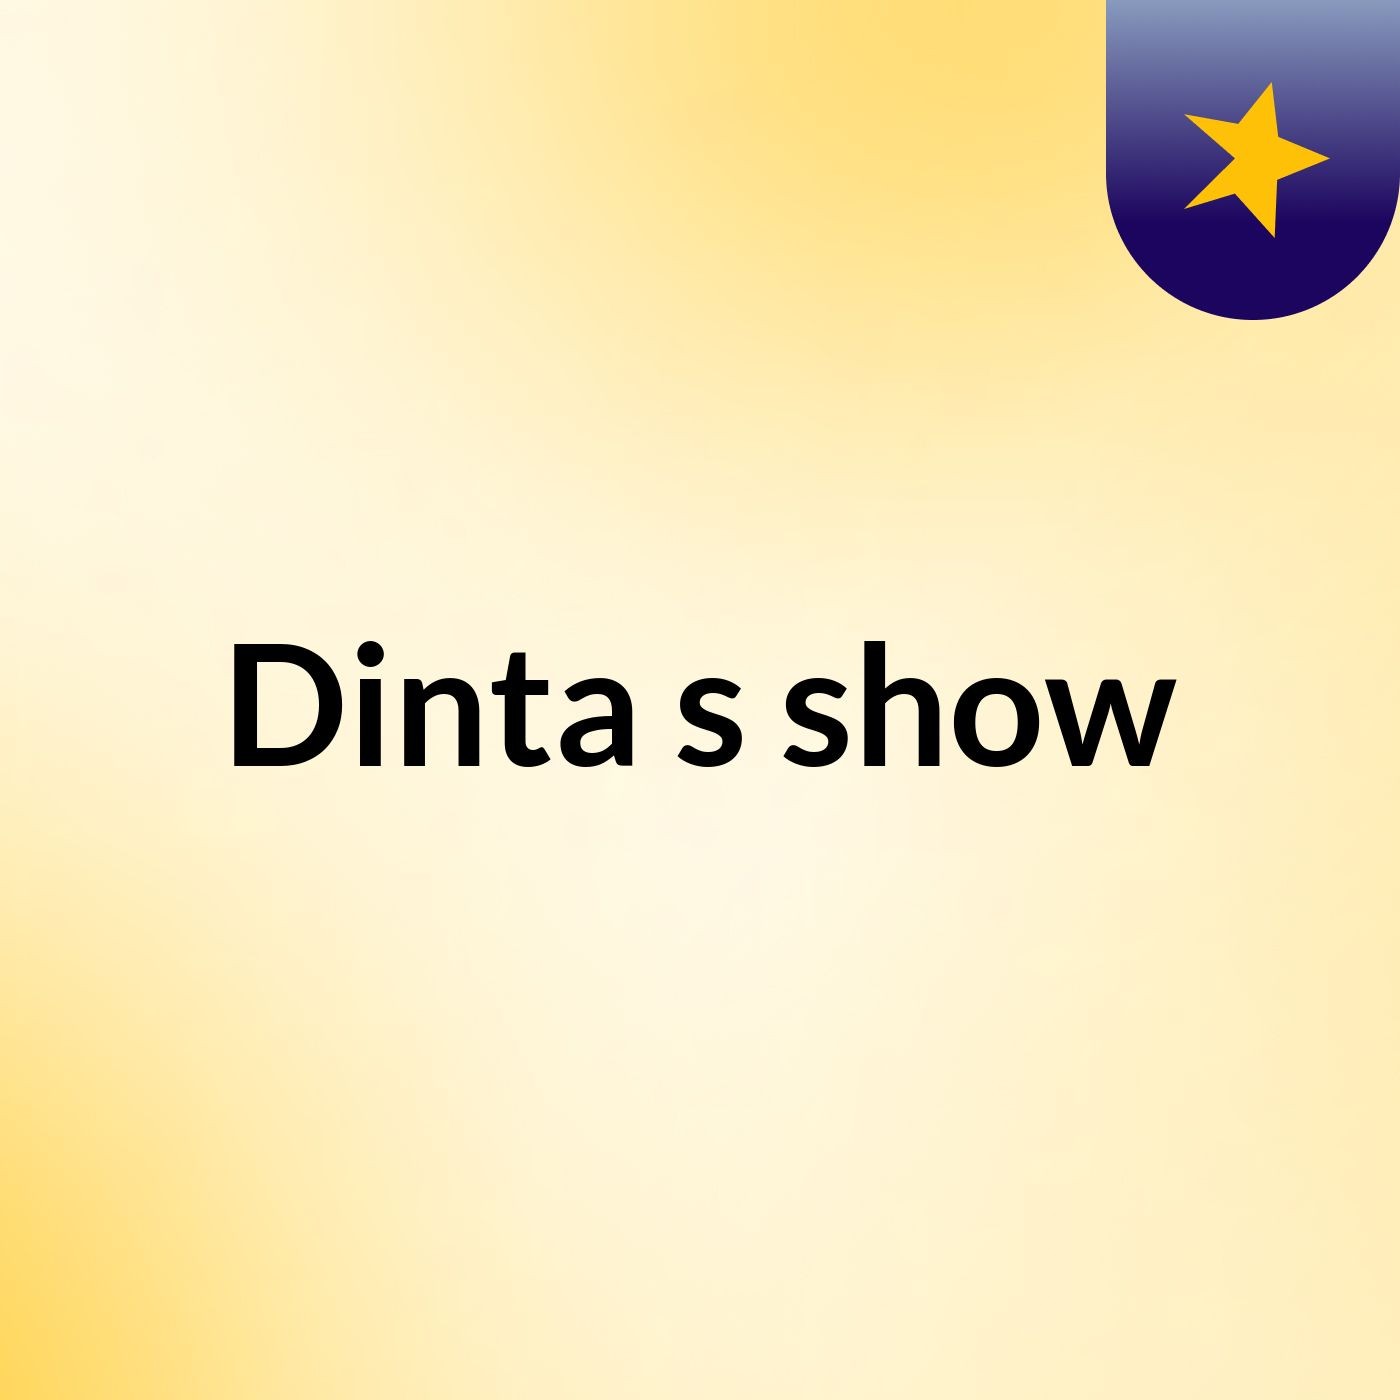 Dinta's show